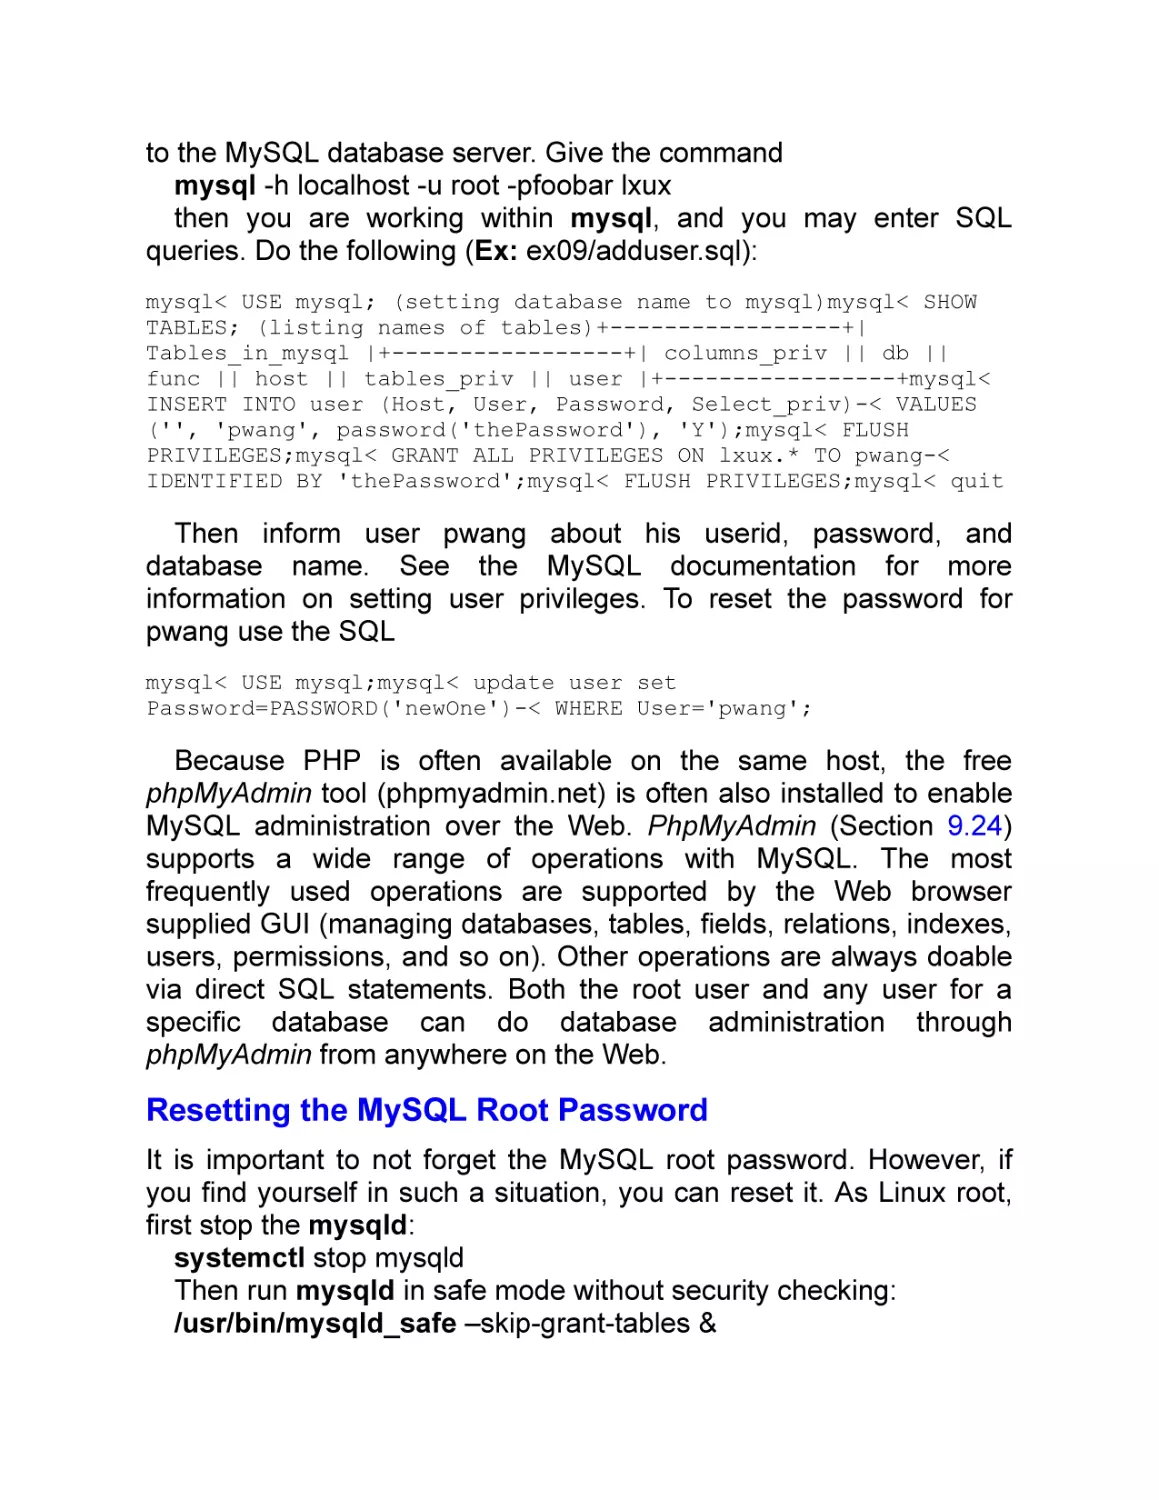 Resetting the MySQL Root Password